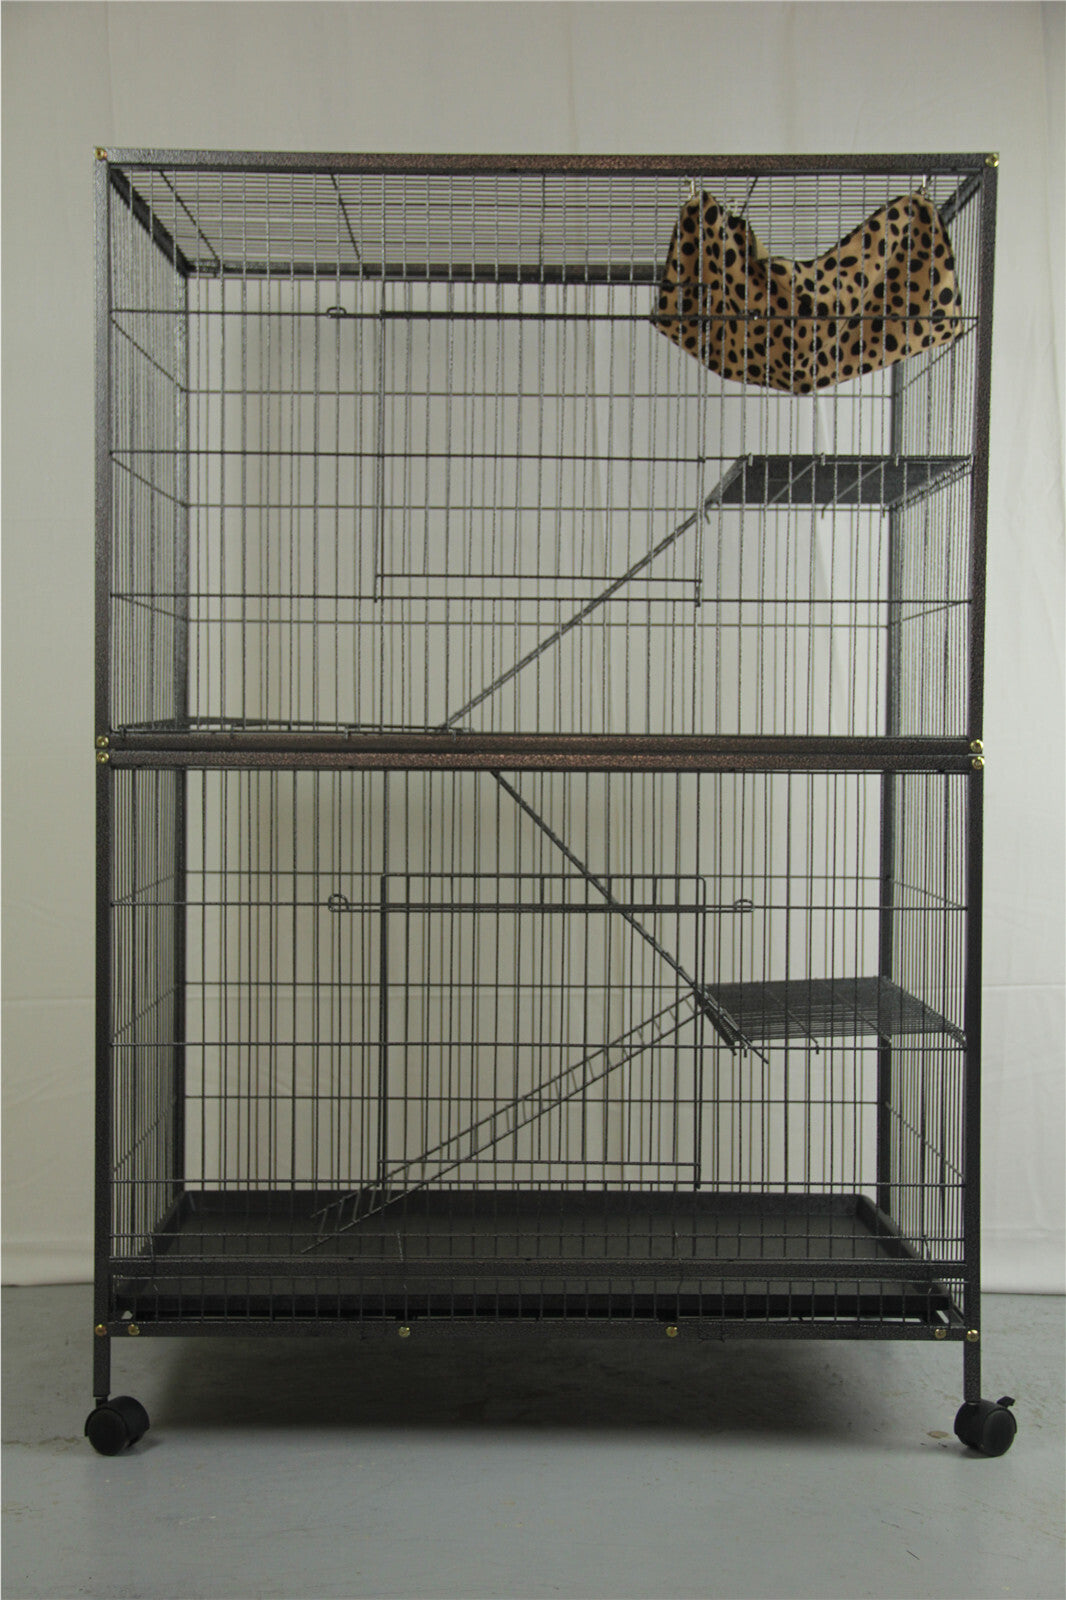 2 X Platforms & 2 X Ladders For 140 cm Ferret Parrot Cat Bird Cage